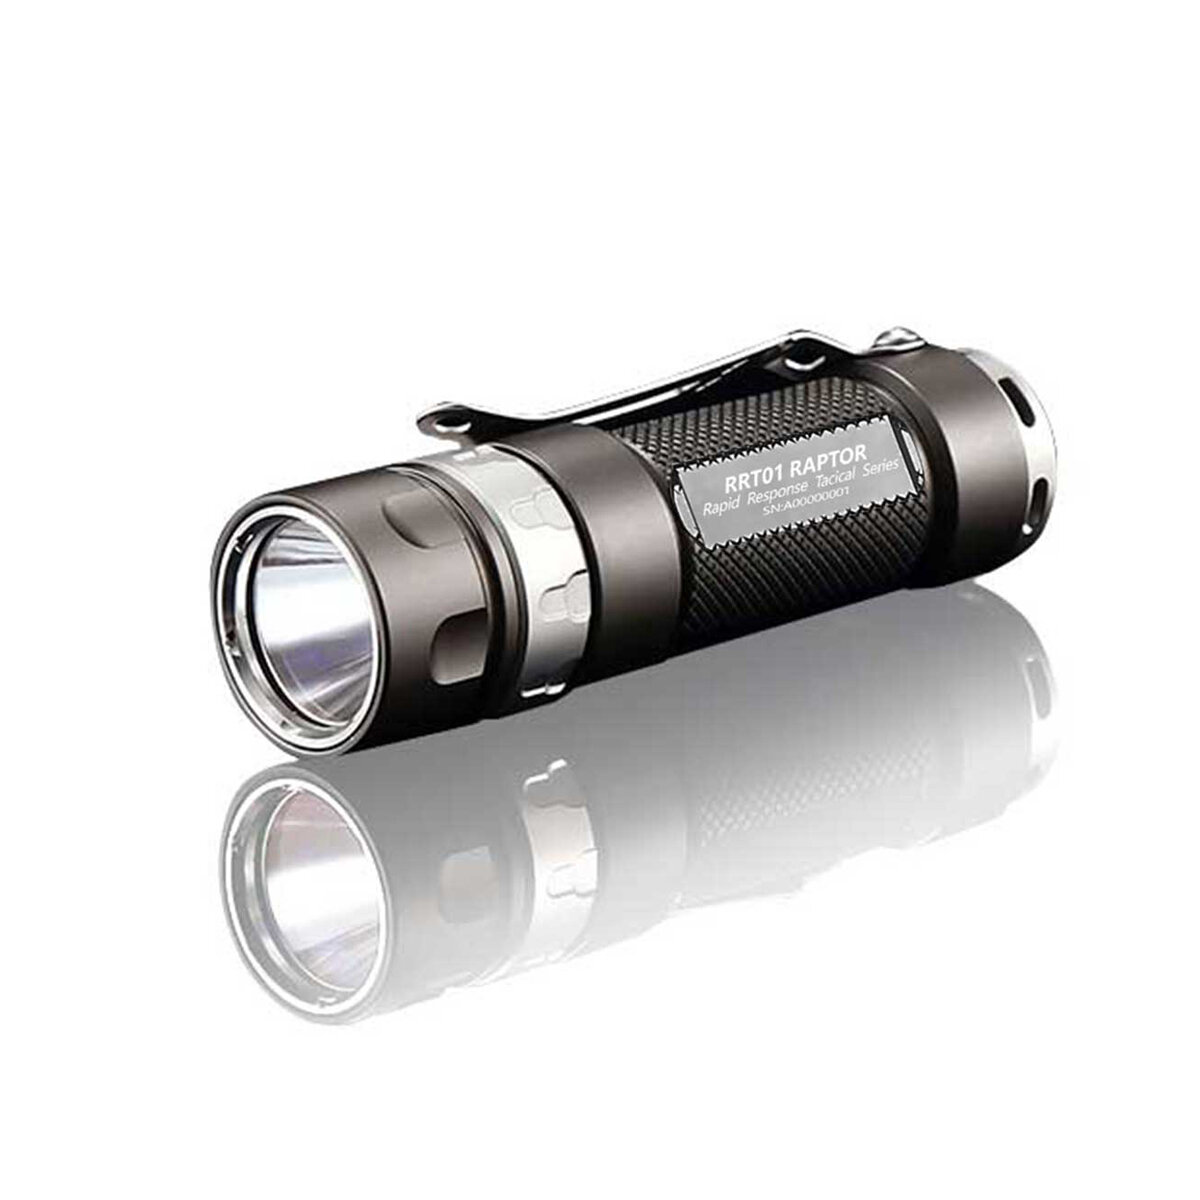 

JETBeam RRT01 950LM XPL / Nichia 219C 3-режимный тактический фонарь IPX8 220M Дальний LED факел